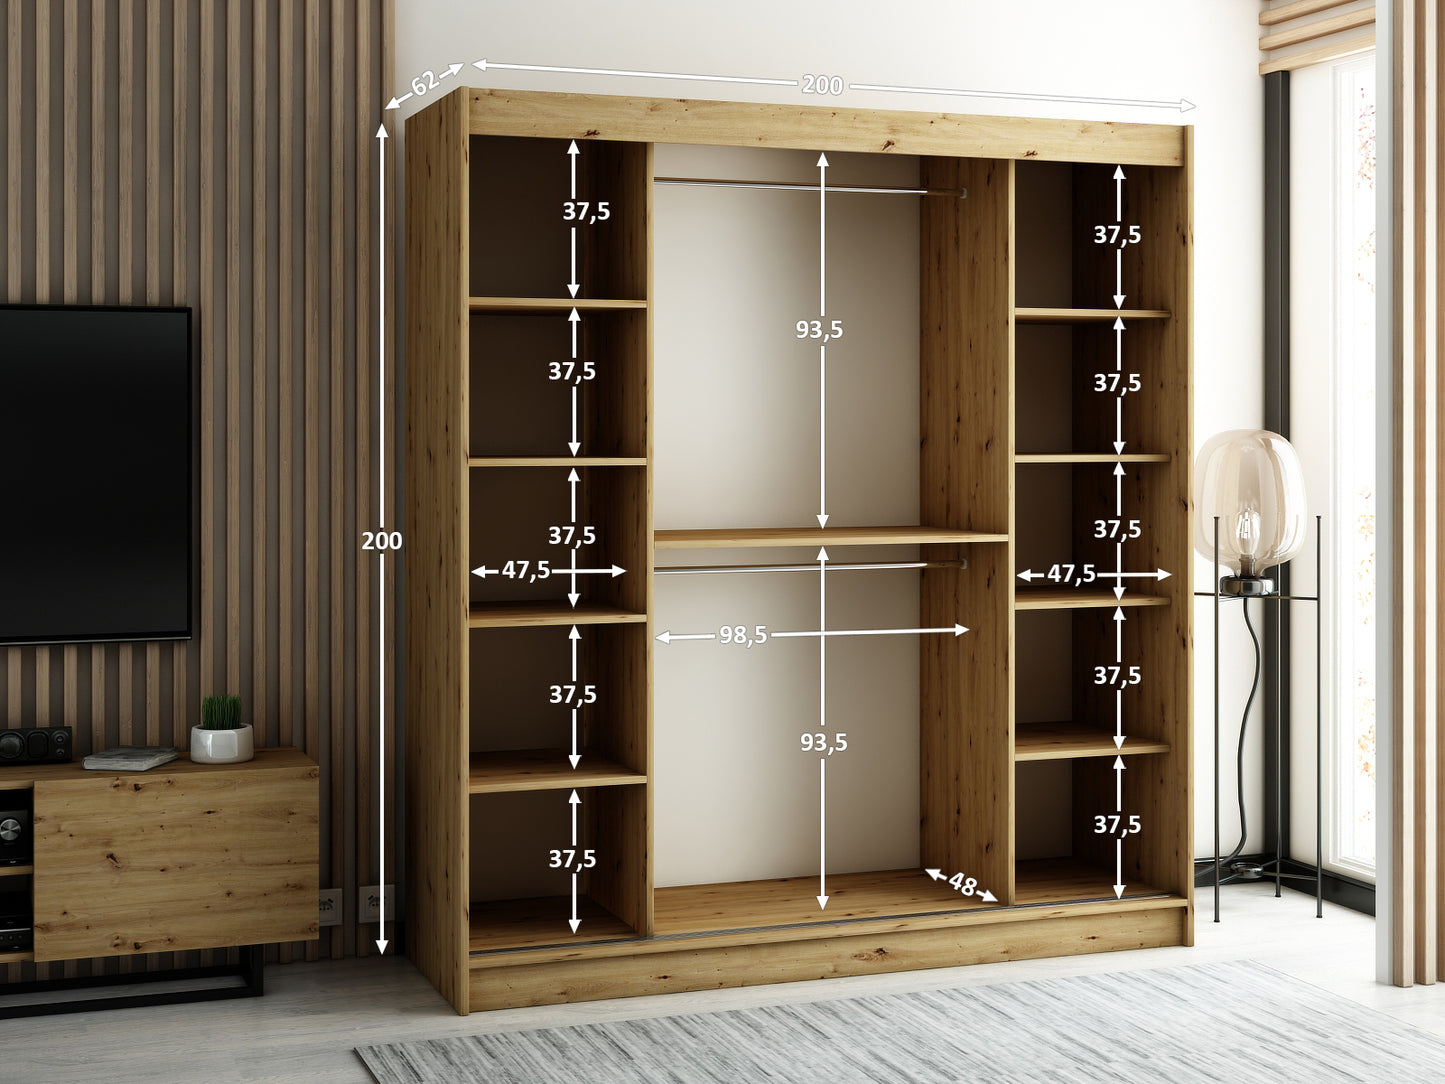 LAMELA 2 - Rustic Wardrobe Sliding Doors Drawers Mirror Optional High Quality >200cm x 200cm<